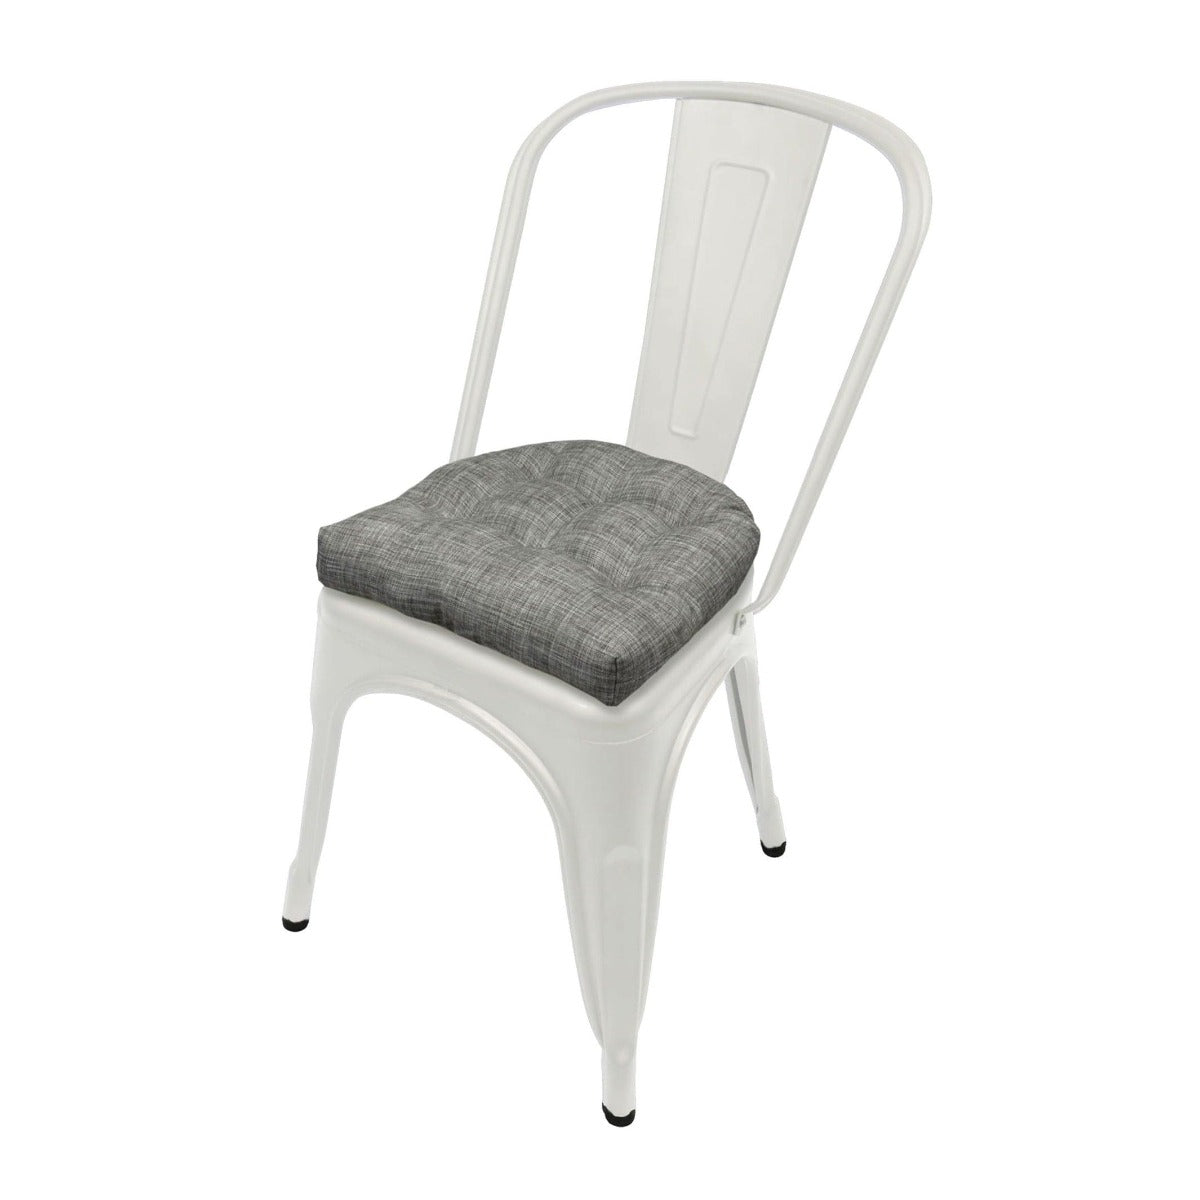 hayden gray tolix chair cushion on white metal chair - barnett home decor